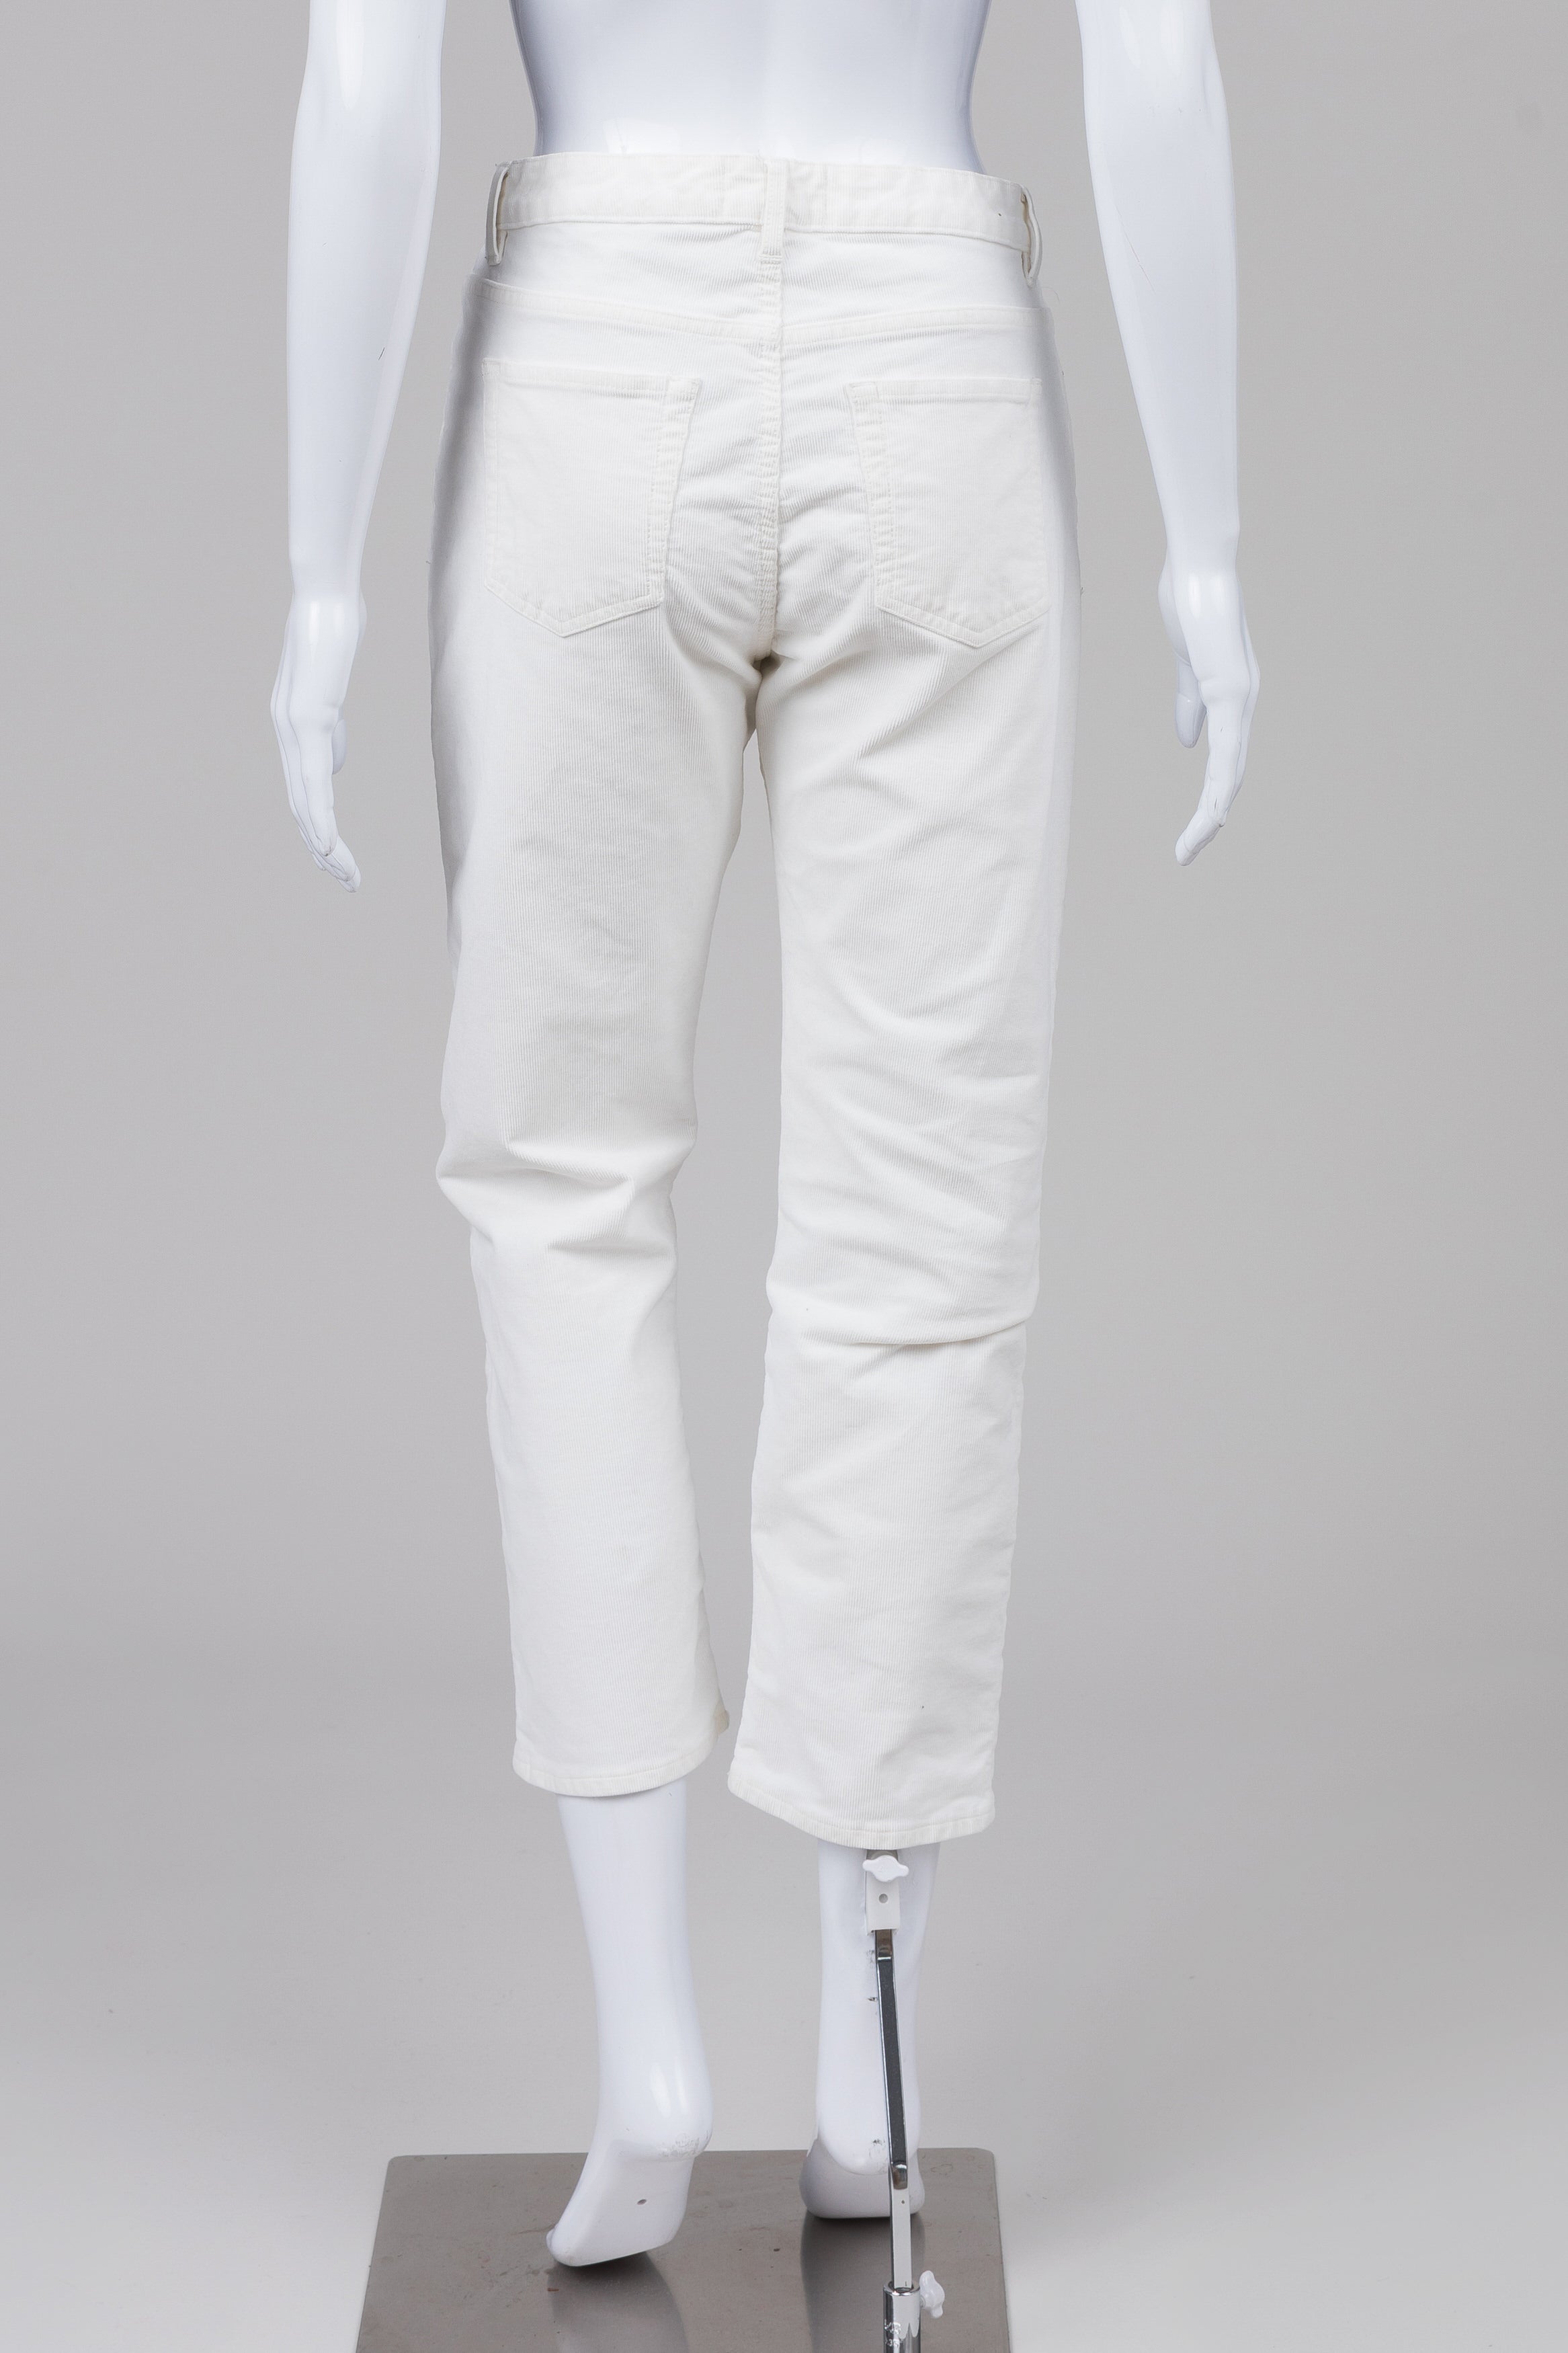 Acne Studio Off White Corduroy Jeans (36)